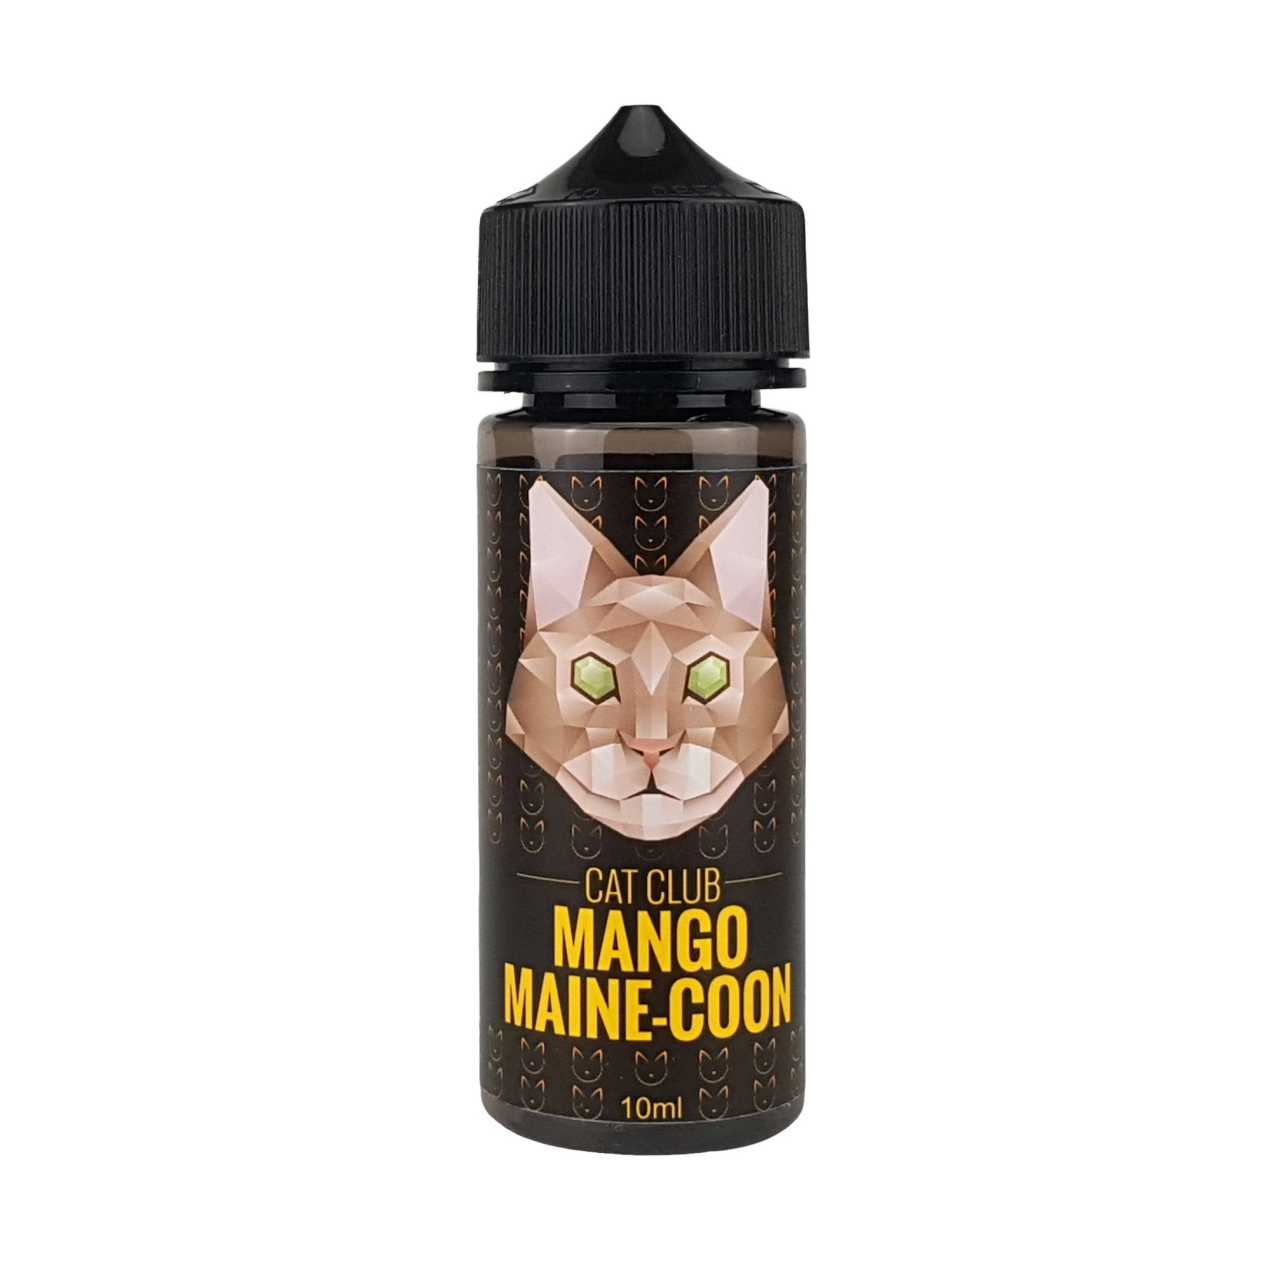 Cat Club Mango Maine-Coon Aroma Longfill